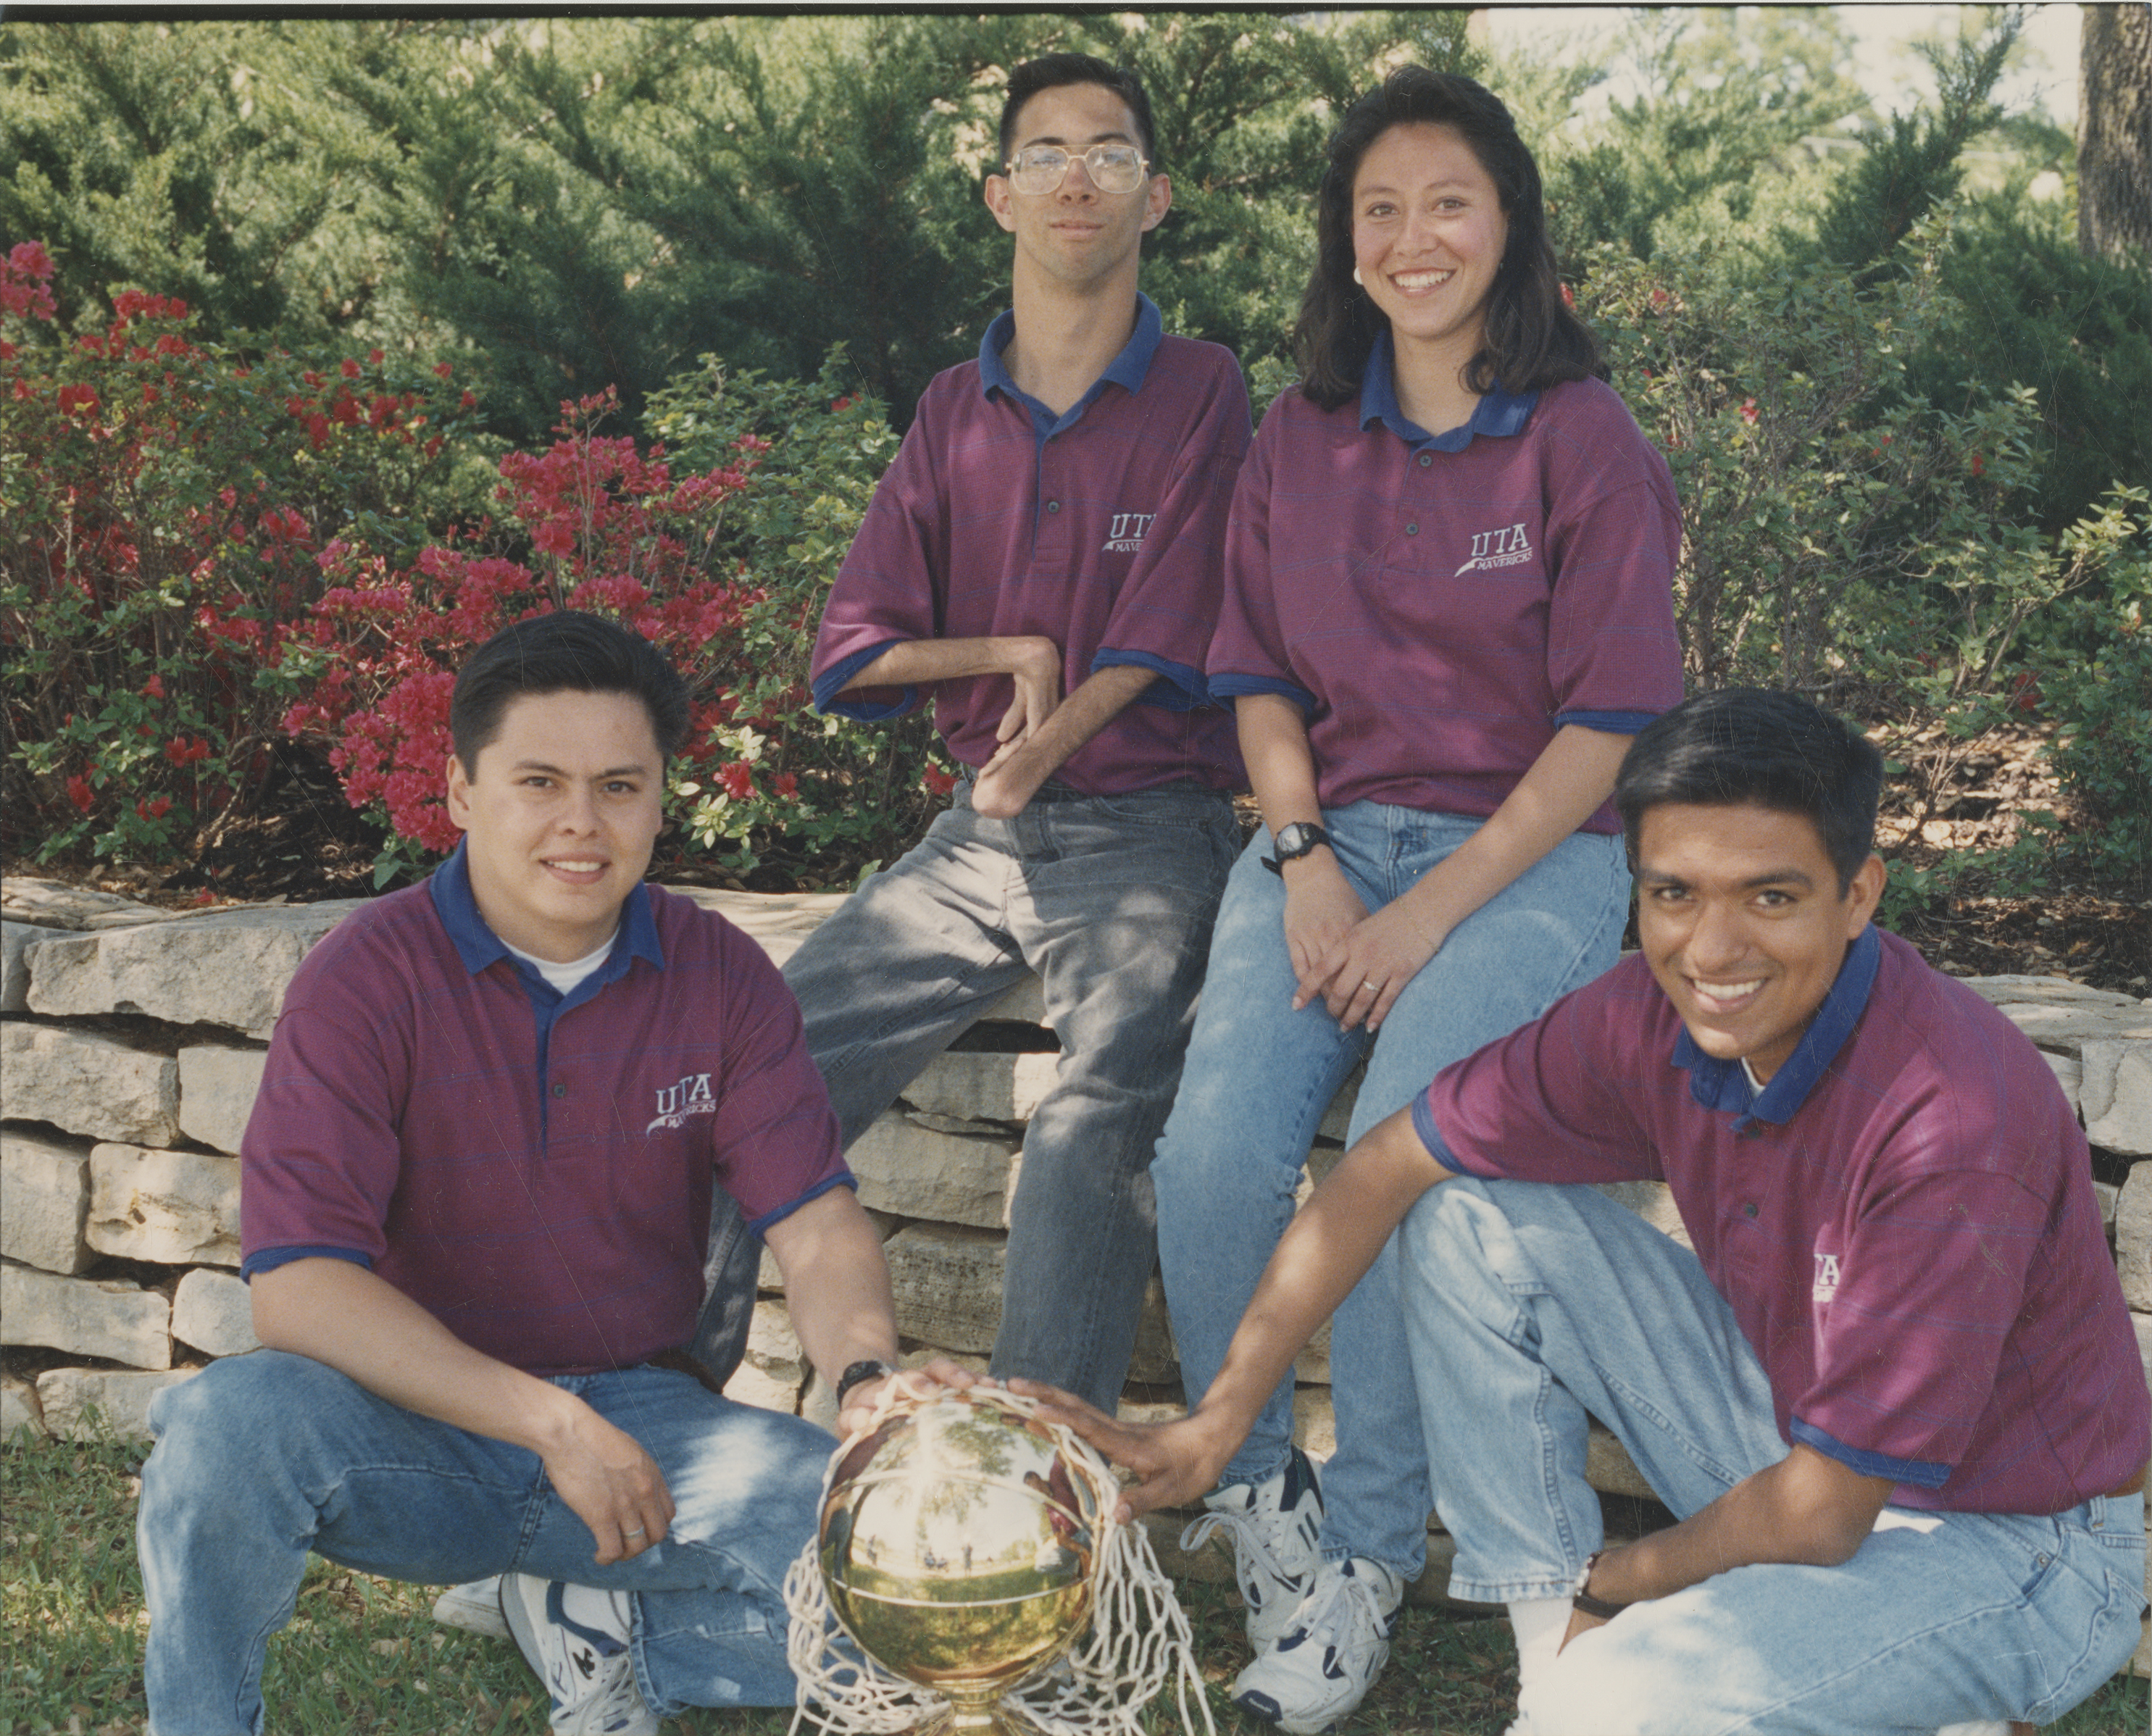 University of Texas at Arlington's Movin' Mavs men's wheelchair basketball team assistants pose for a photograph